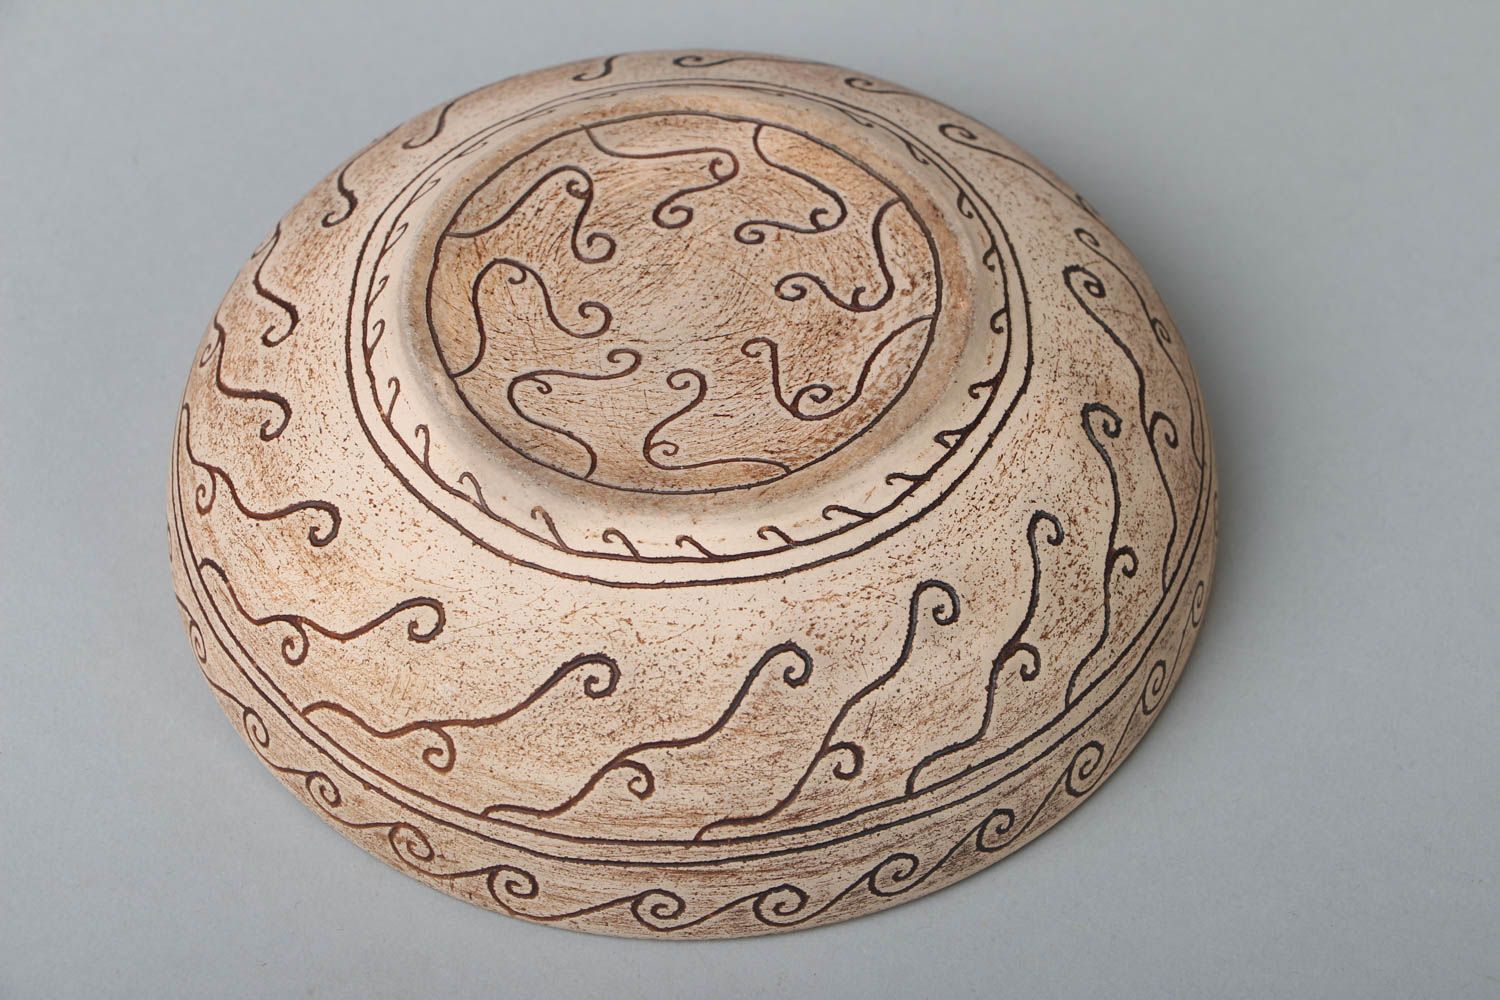 Handmade ceramic bowl photo 3